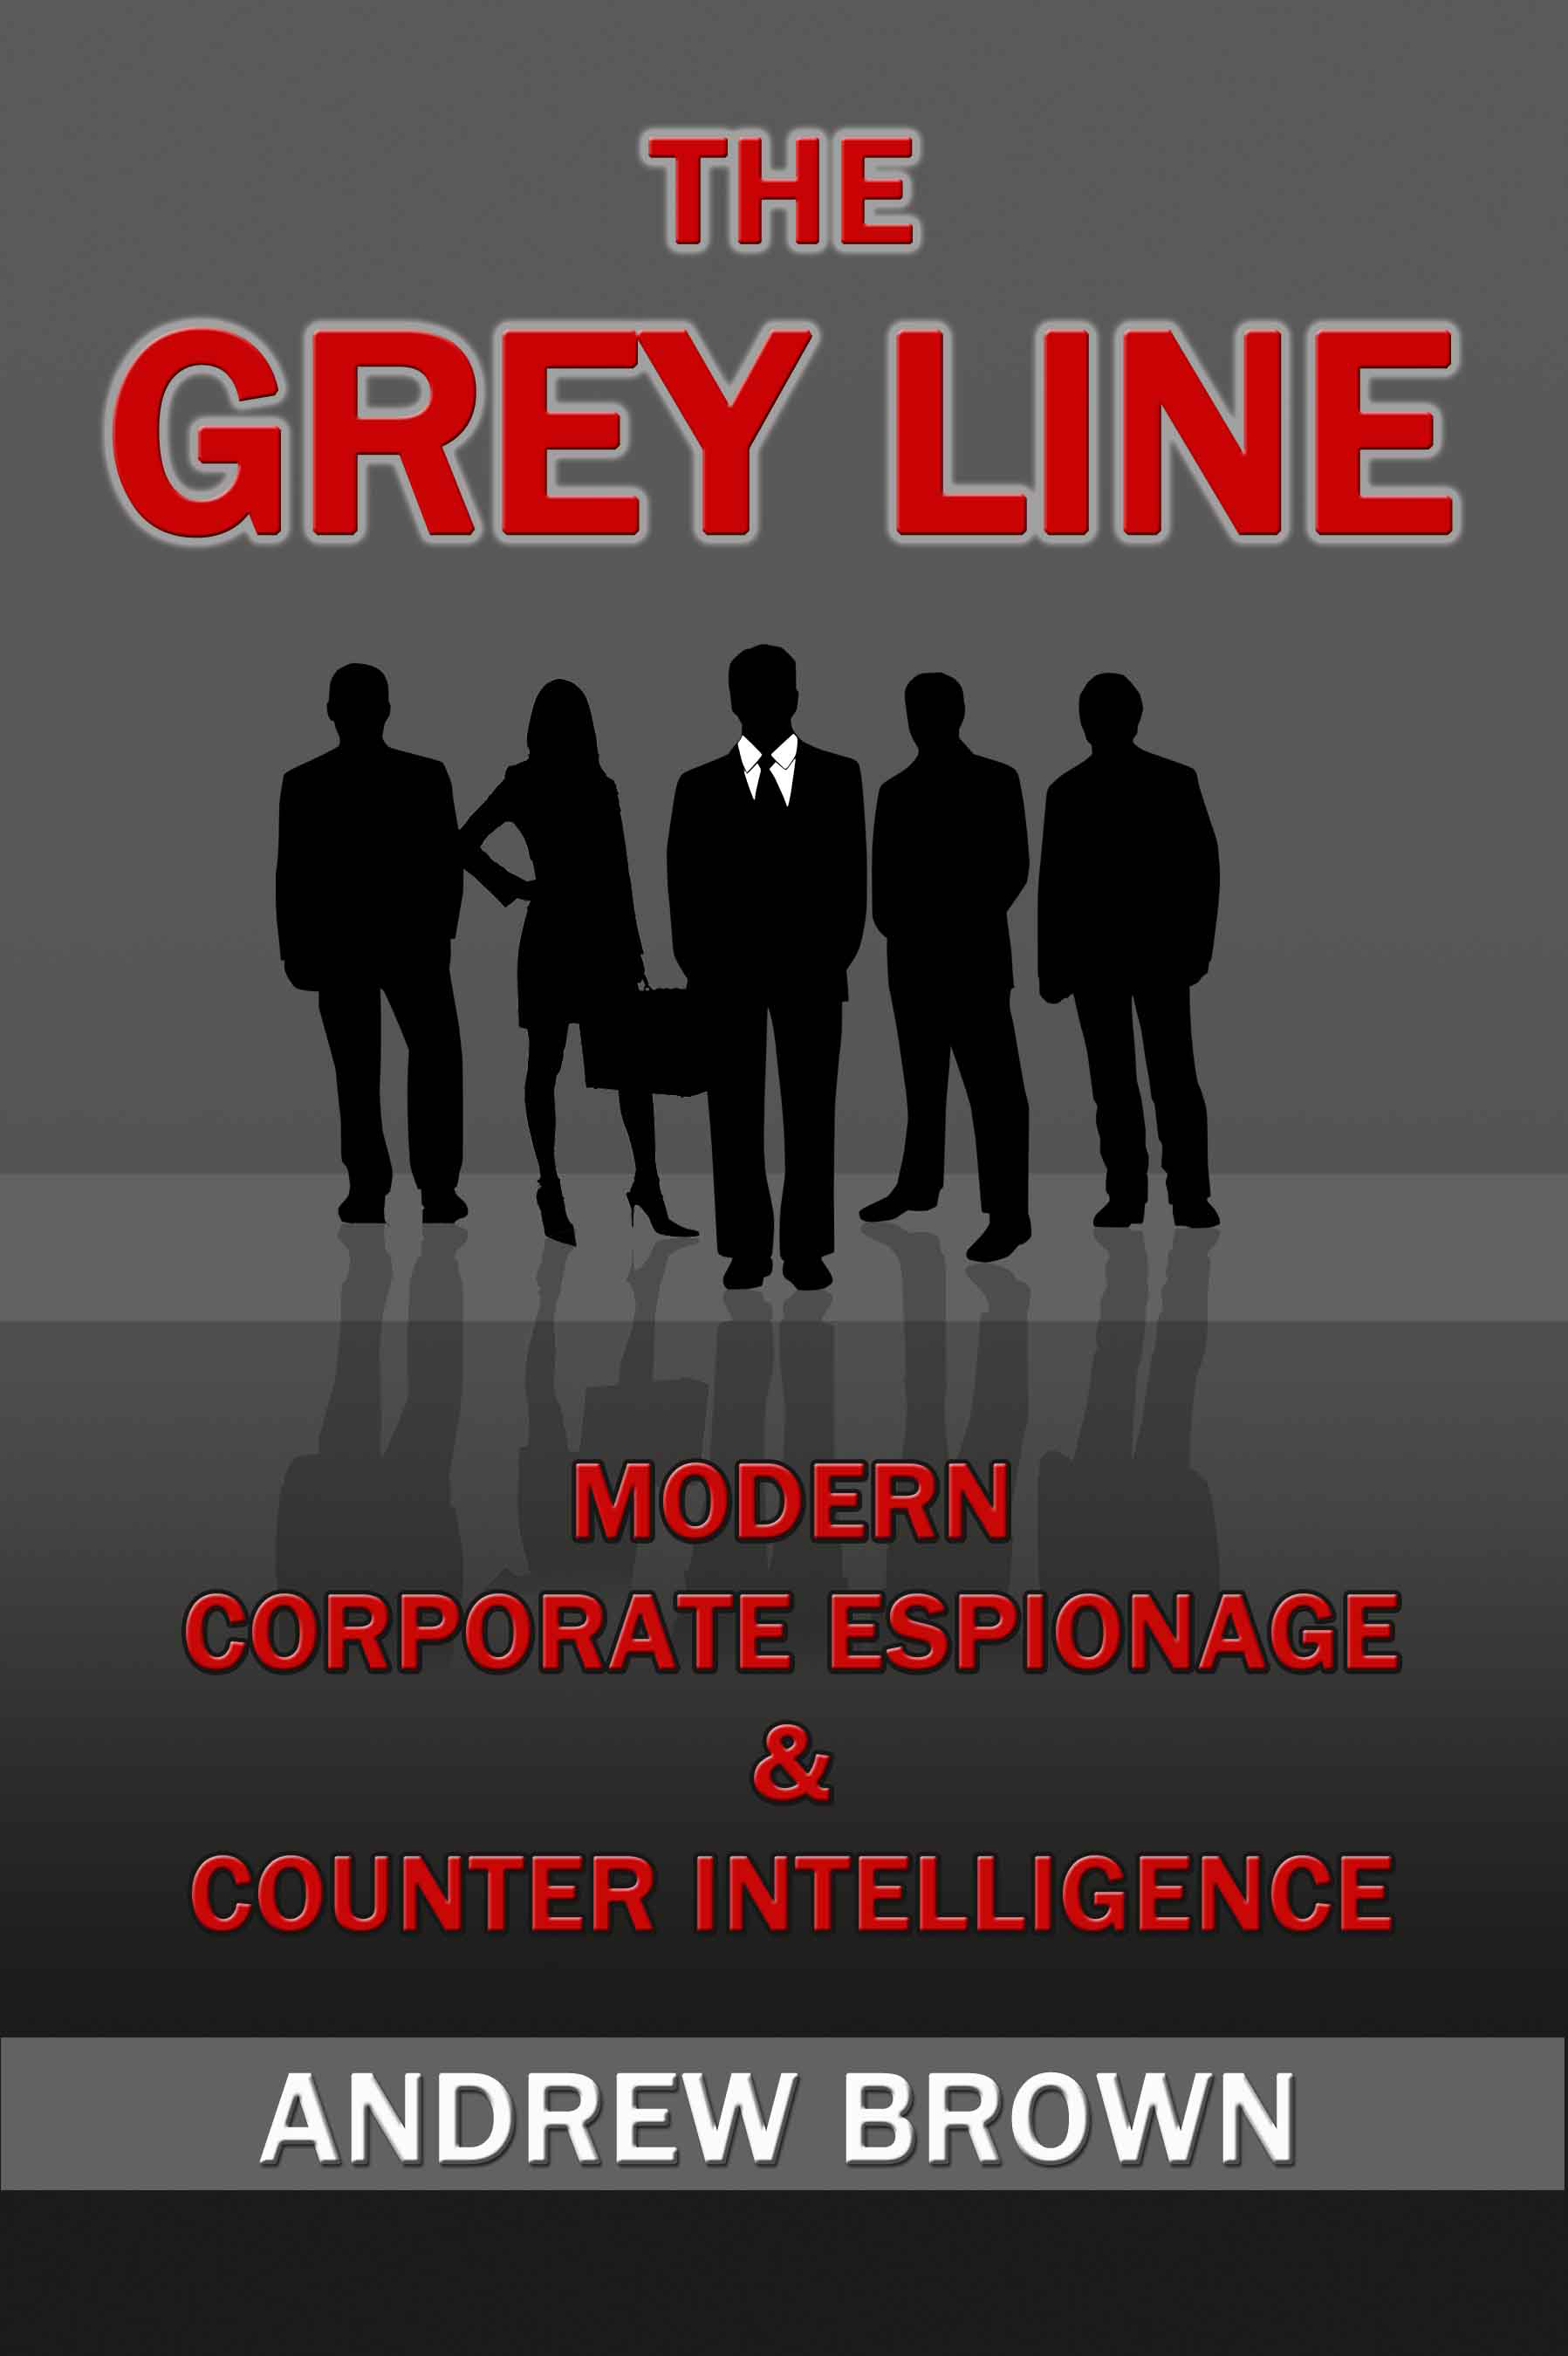 corporate espionage definition